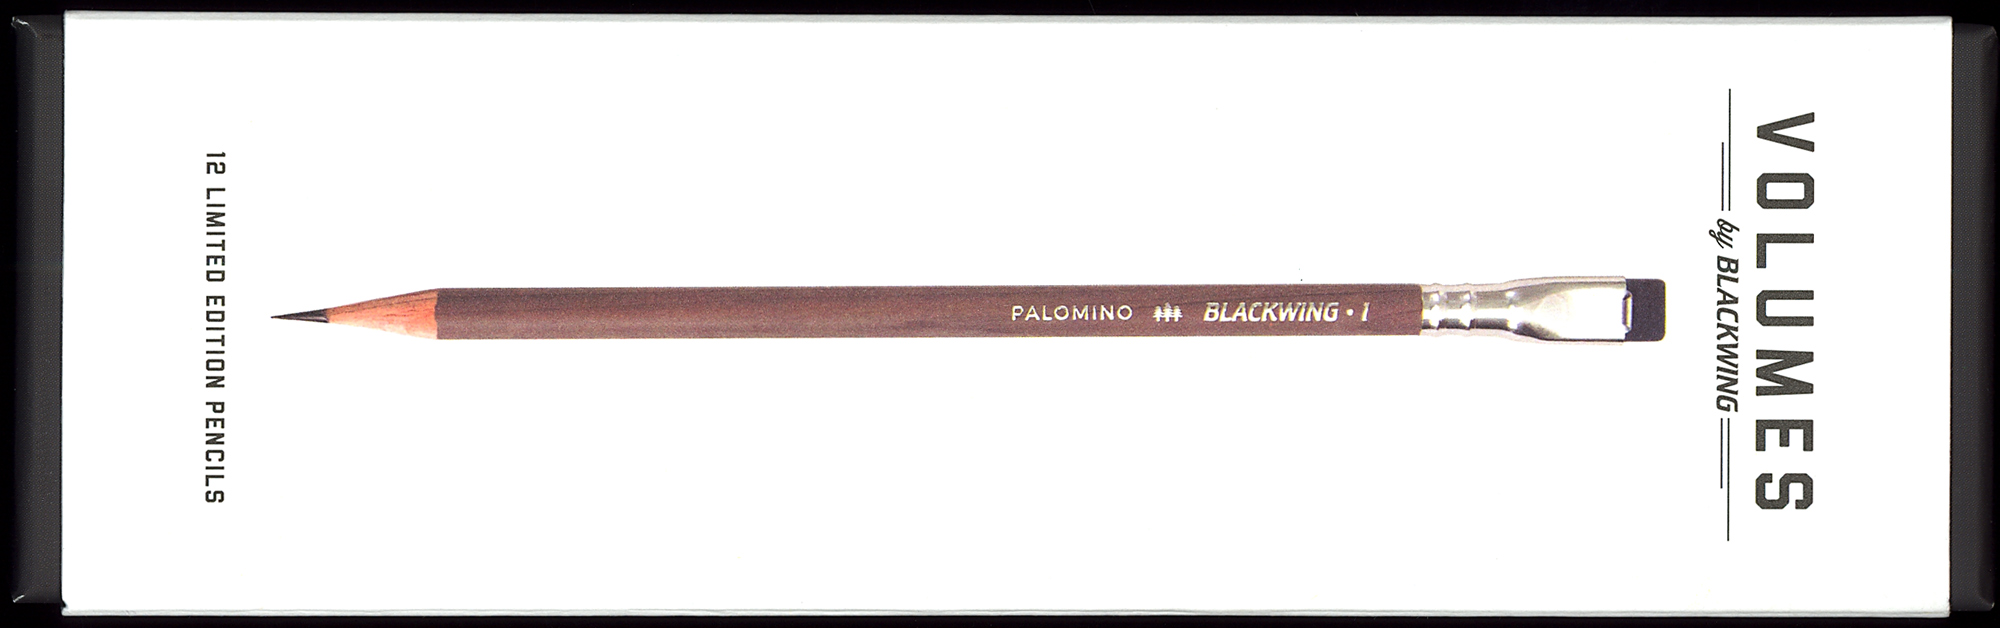 Blackwing Volumes 1 by Palomino